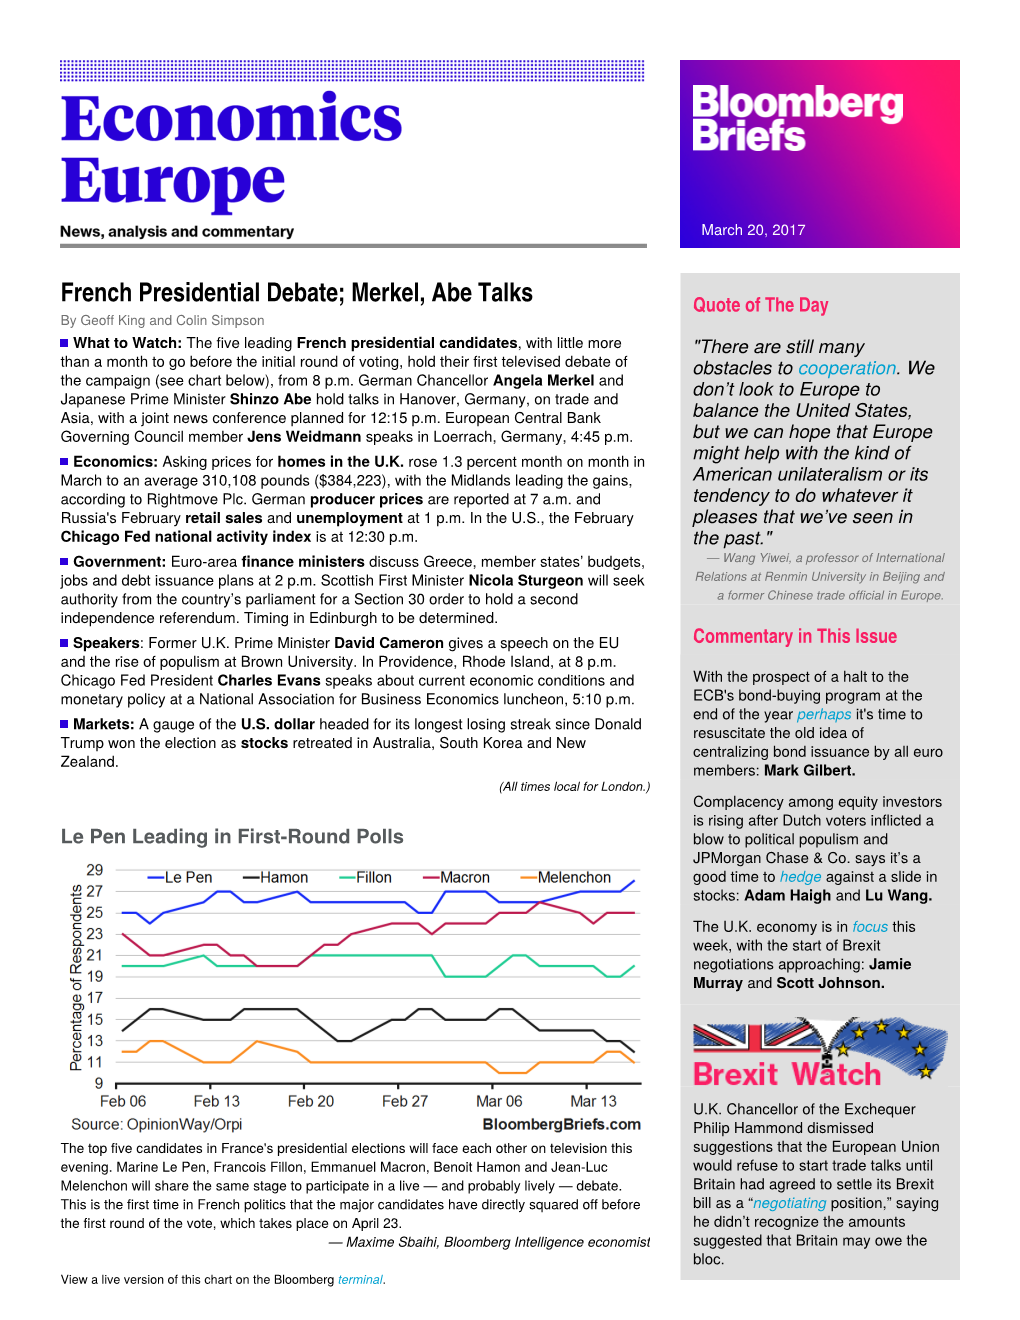 Bloomberg Briefs: Economics Europe